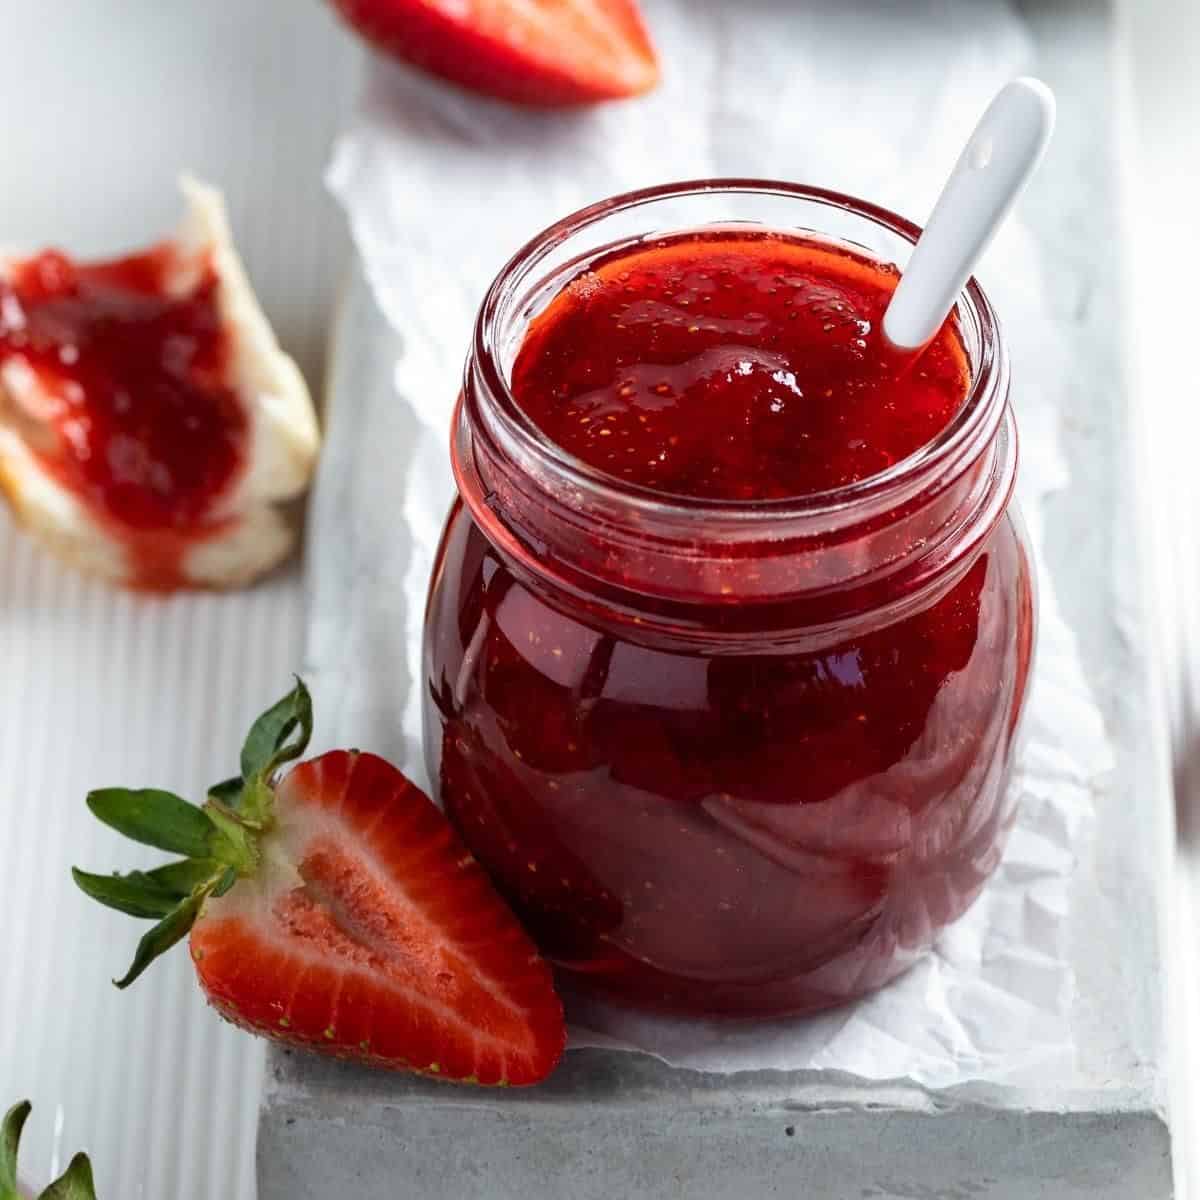 Strawberry jam feature